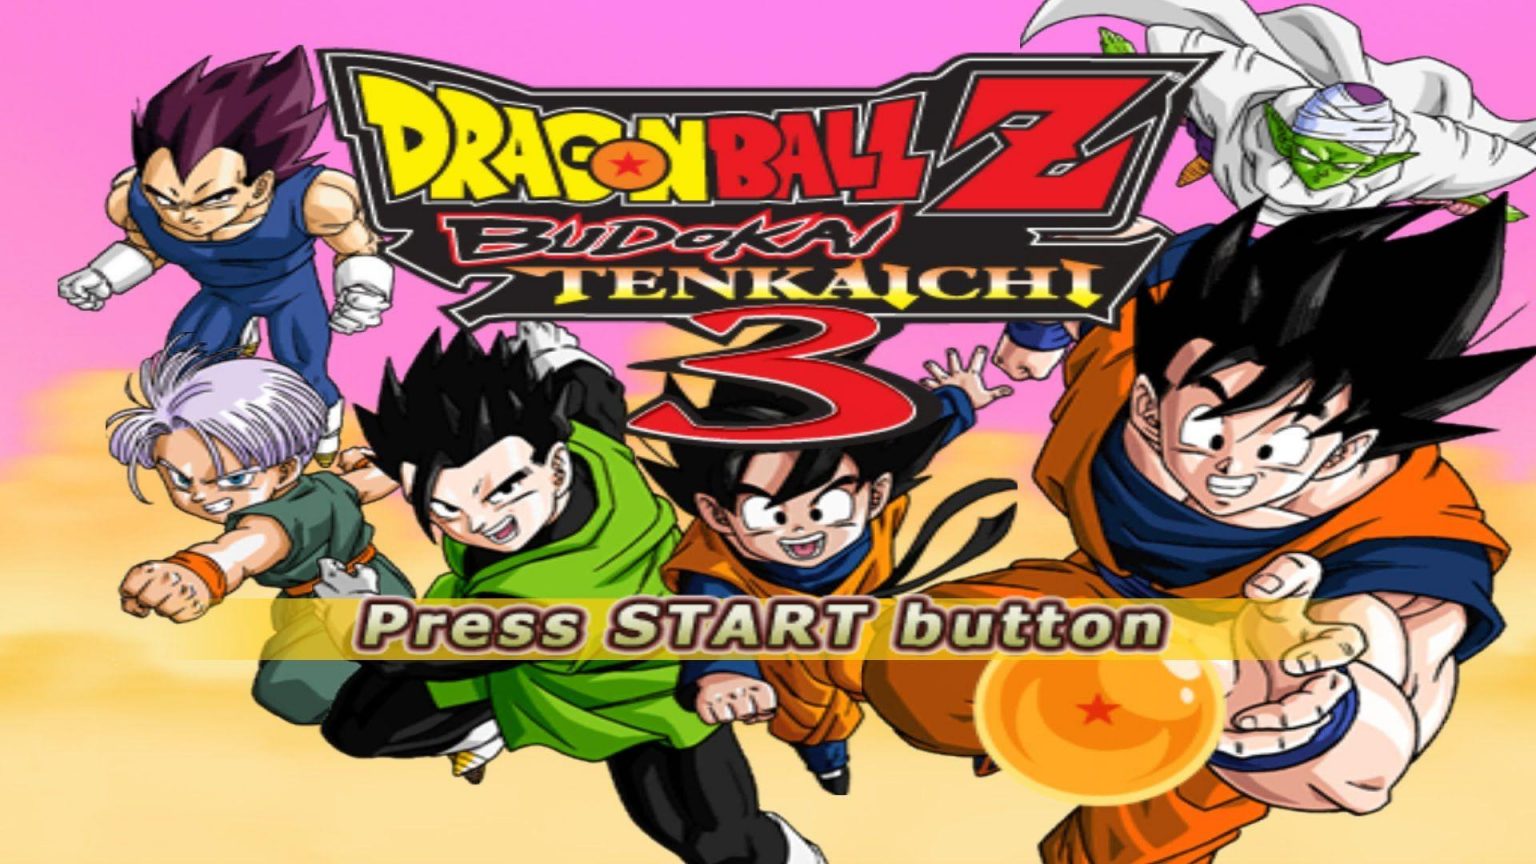 Dragon Ball Z Budokai Tenkaichi 3 PS2 1